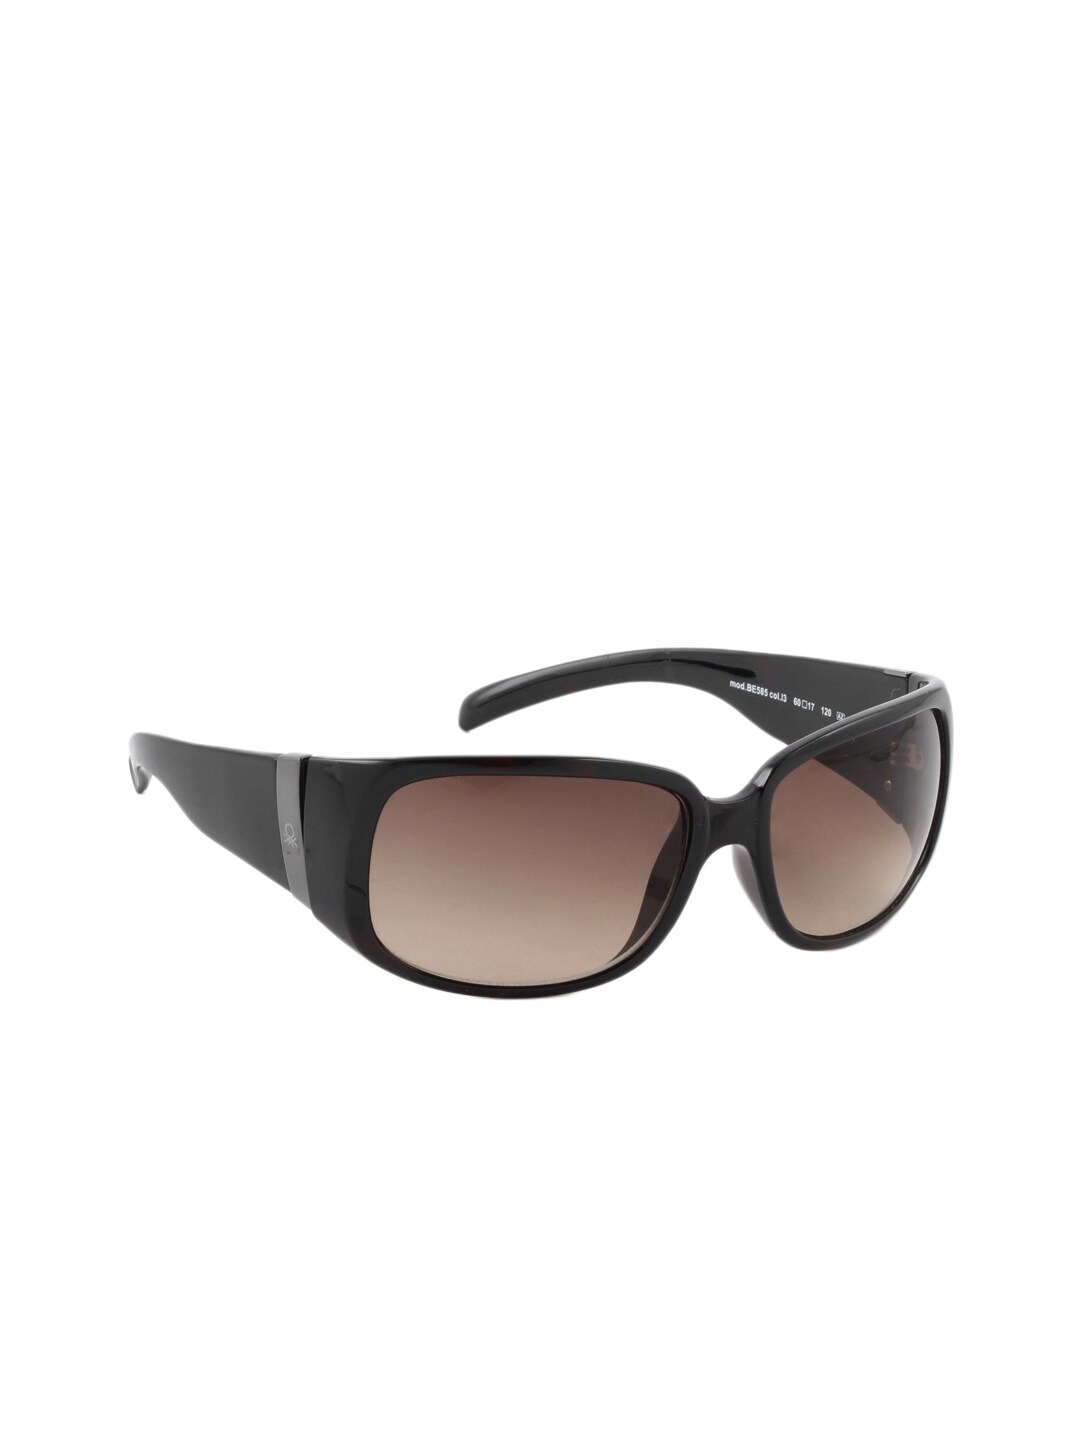 United Colors of Benetton Women Black Sunglasses